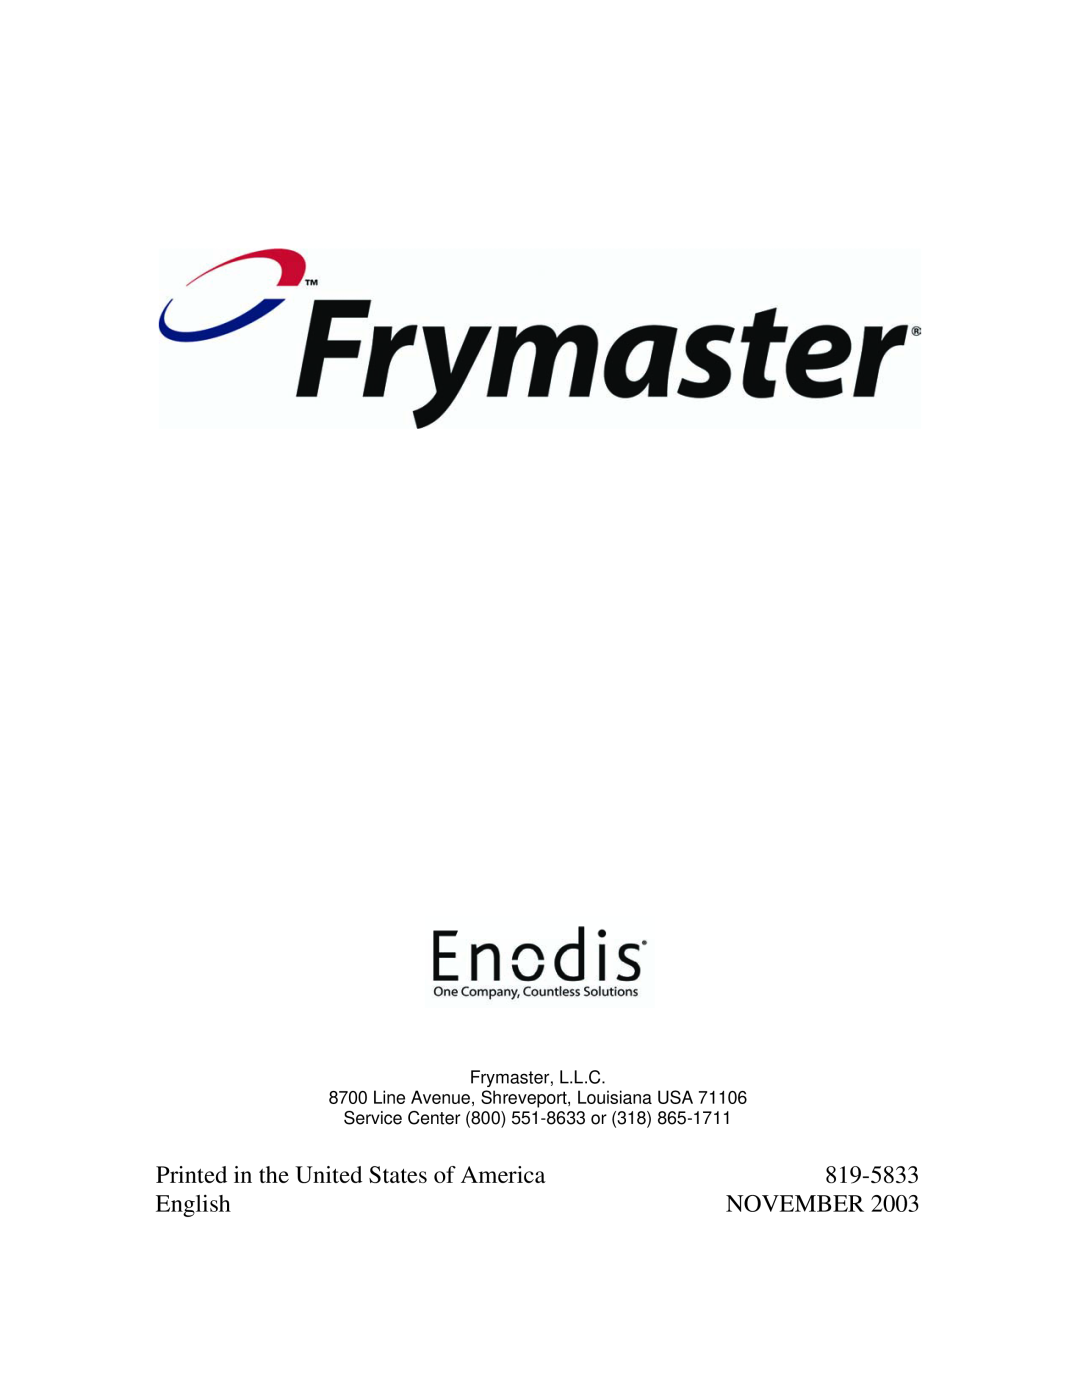 Frymaster M2000 operation manual 819-5833, English, November, Frymaster, L.L.C 